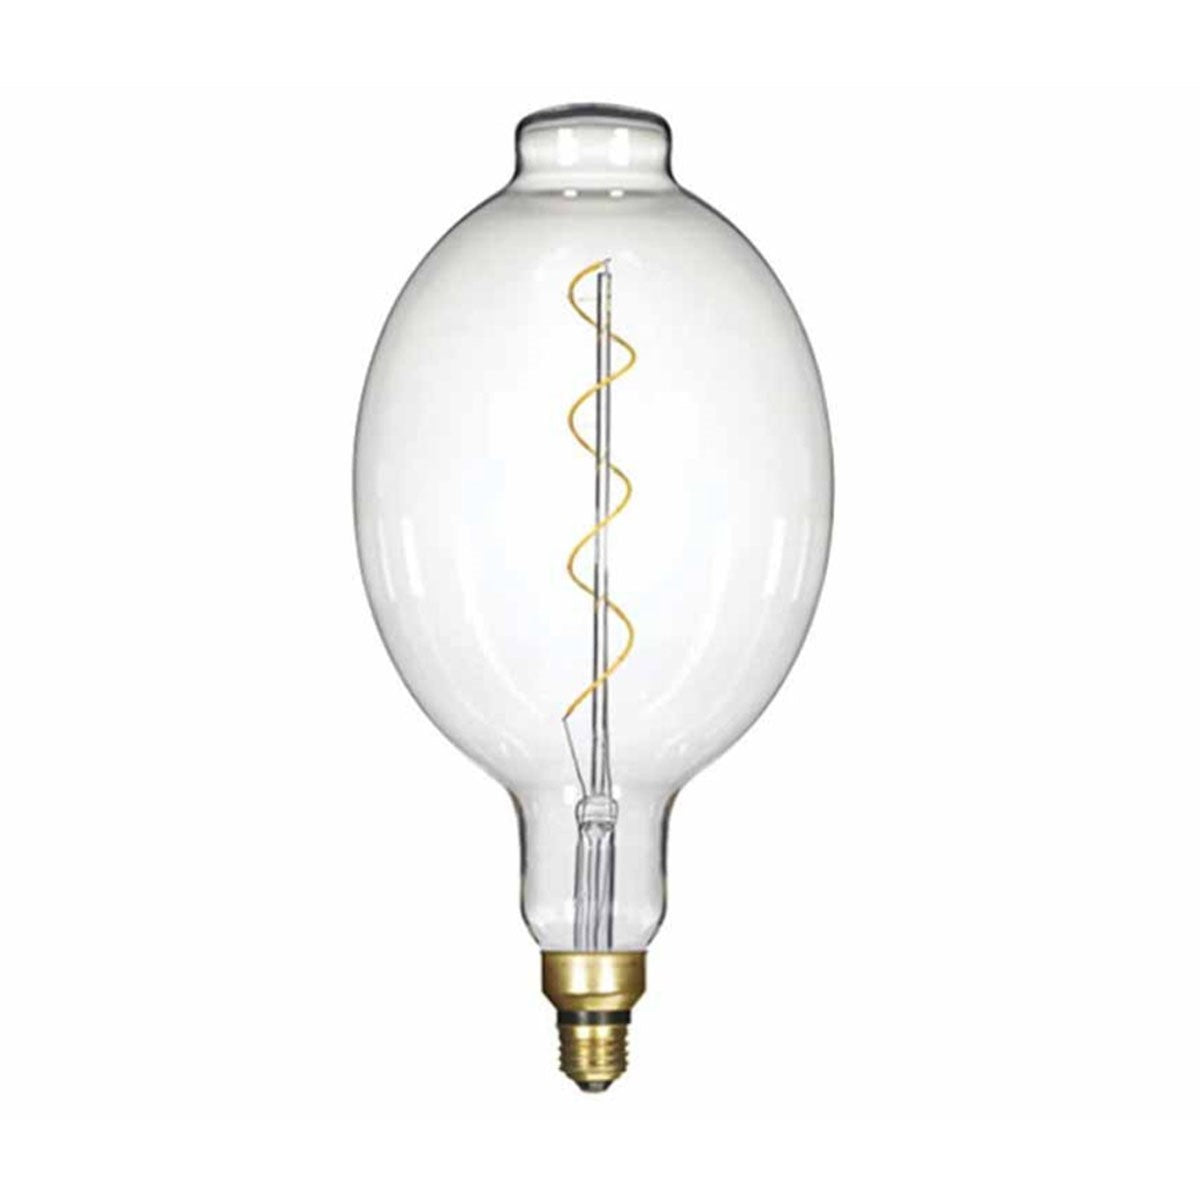 BT56 Bulged Tube Filament LED Bulb, 4 Watt, 200 Lumens, 2100K, E26 Medium Base, Clear Finish